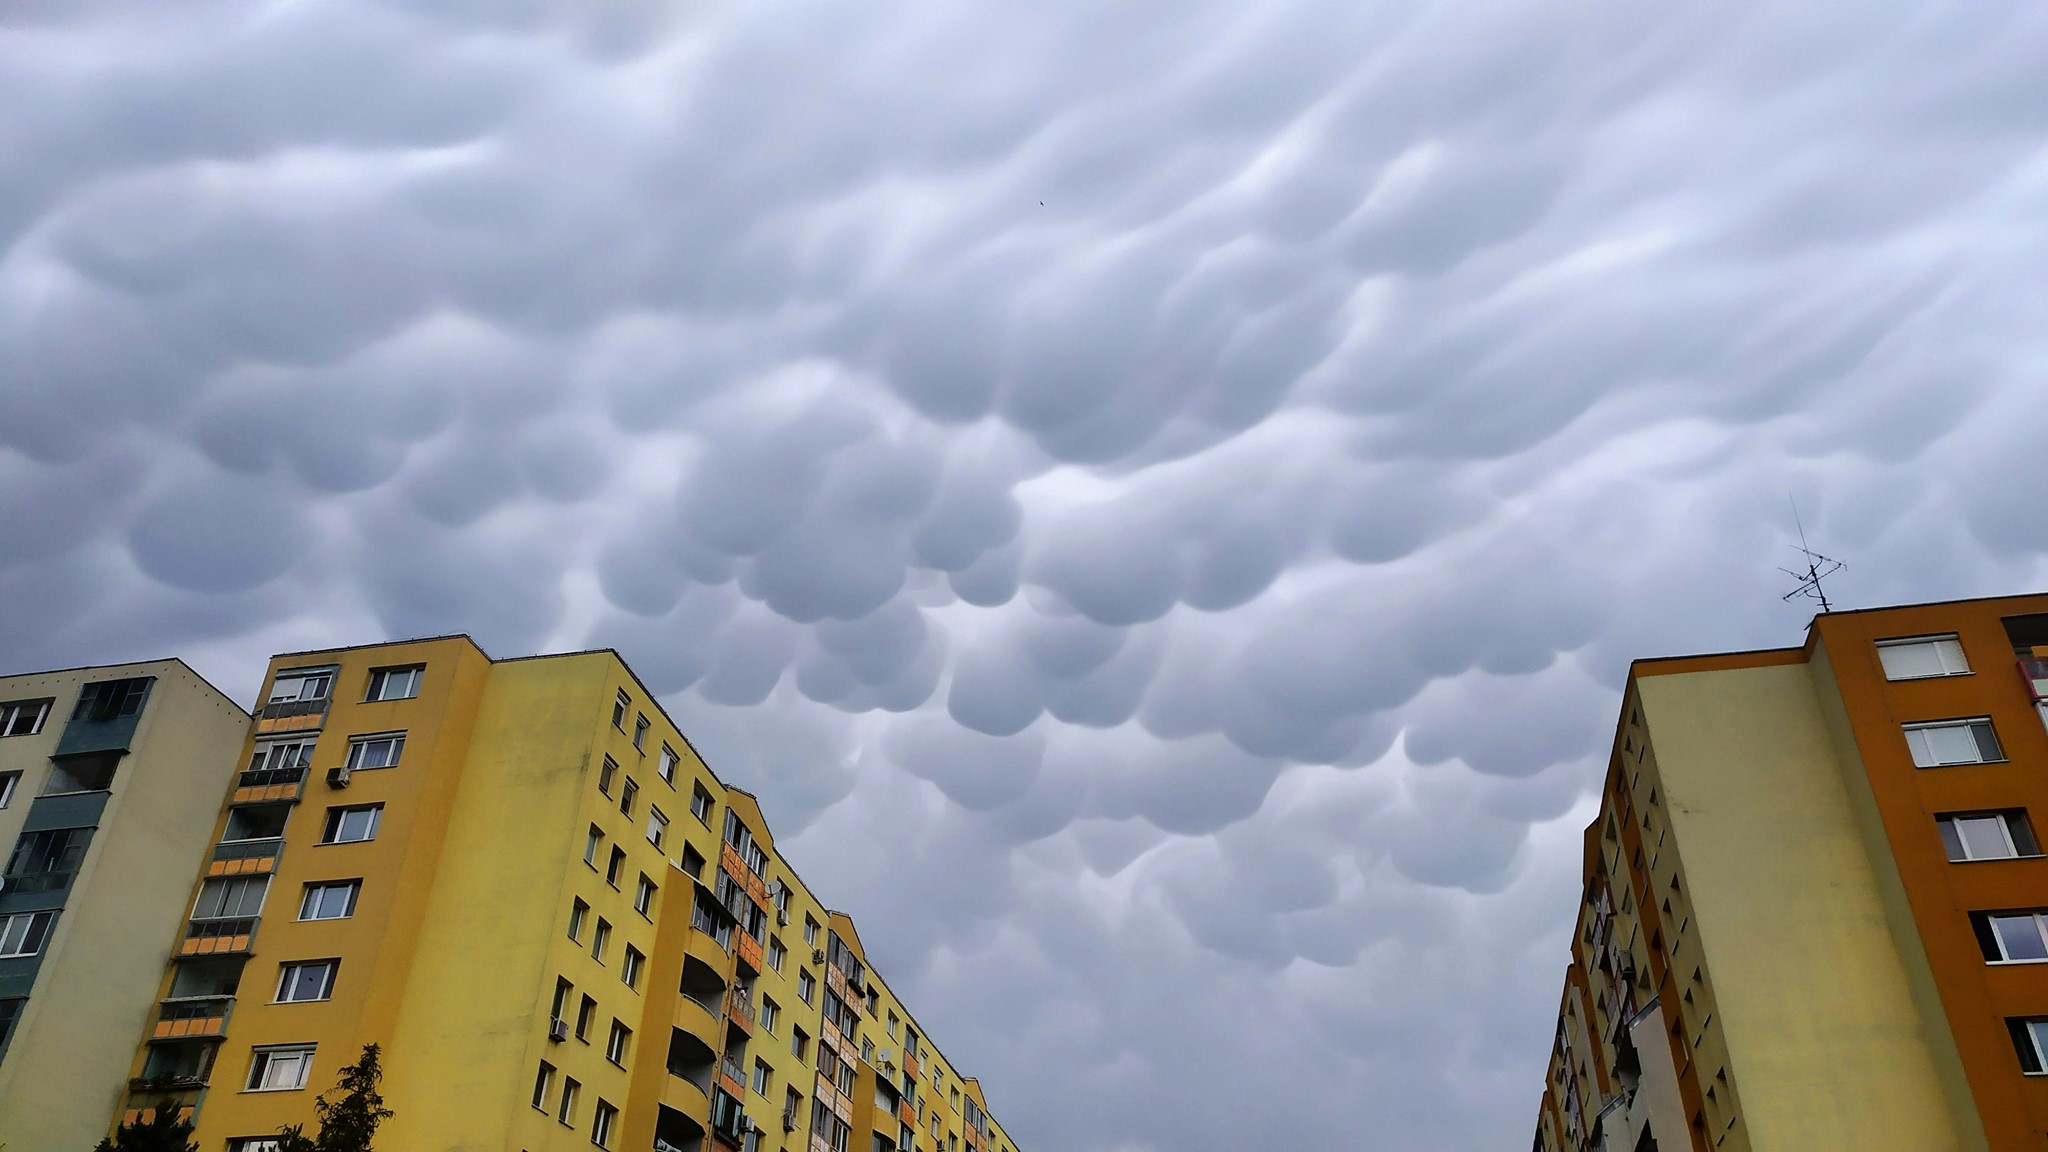 Vzácne oblaky druhu mammatus nad Bratislavou.